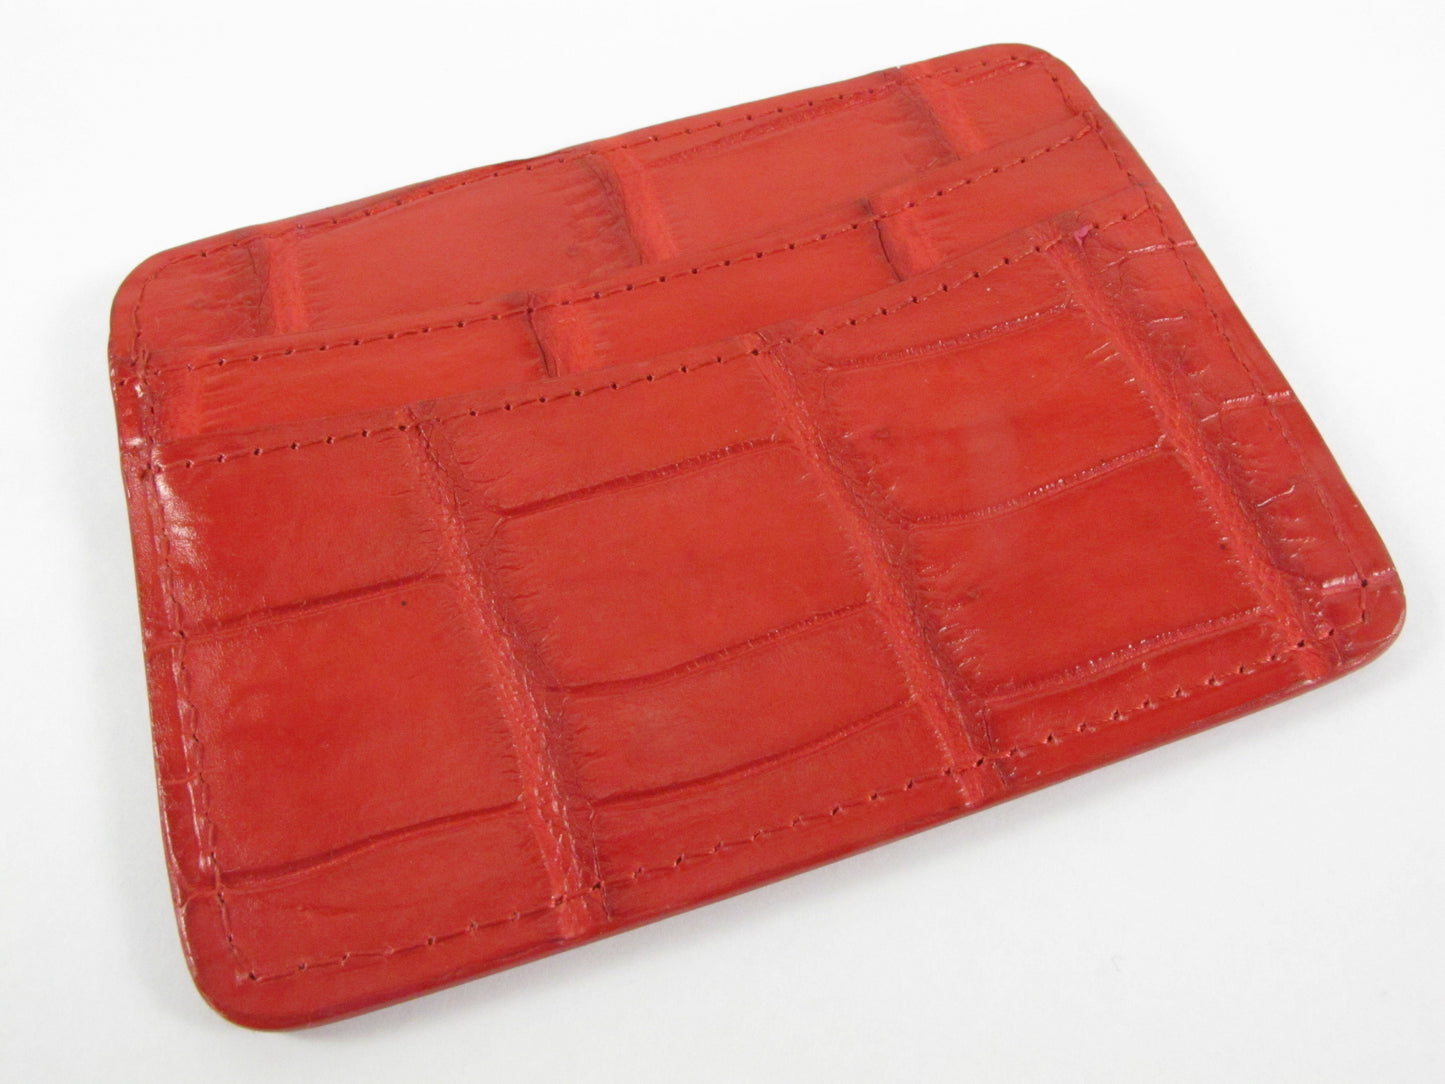 Genuine Crocodile Skin Leather Slim Business & Credit Card Holder Wallet